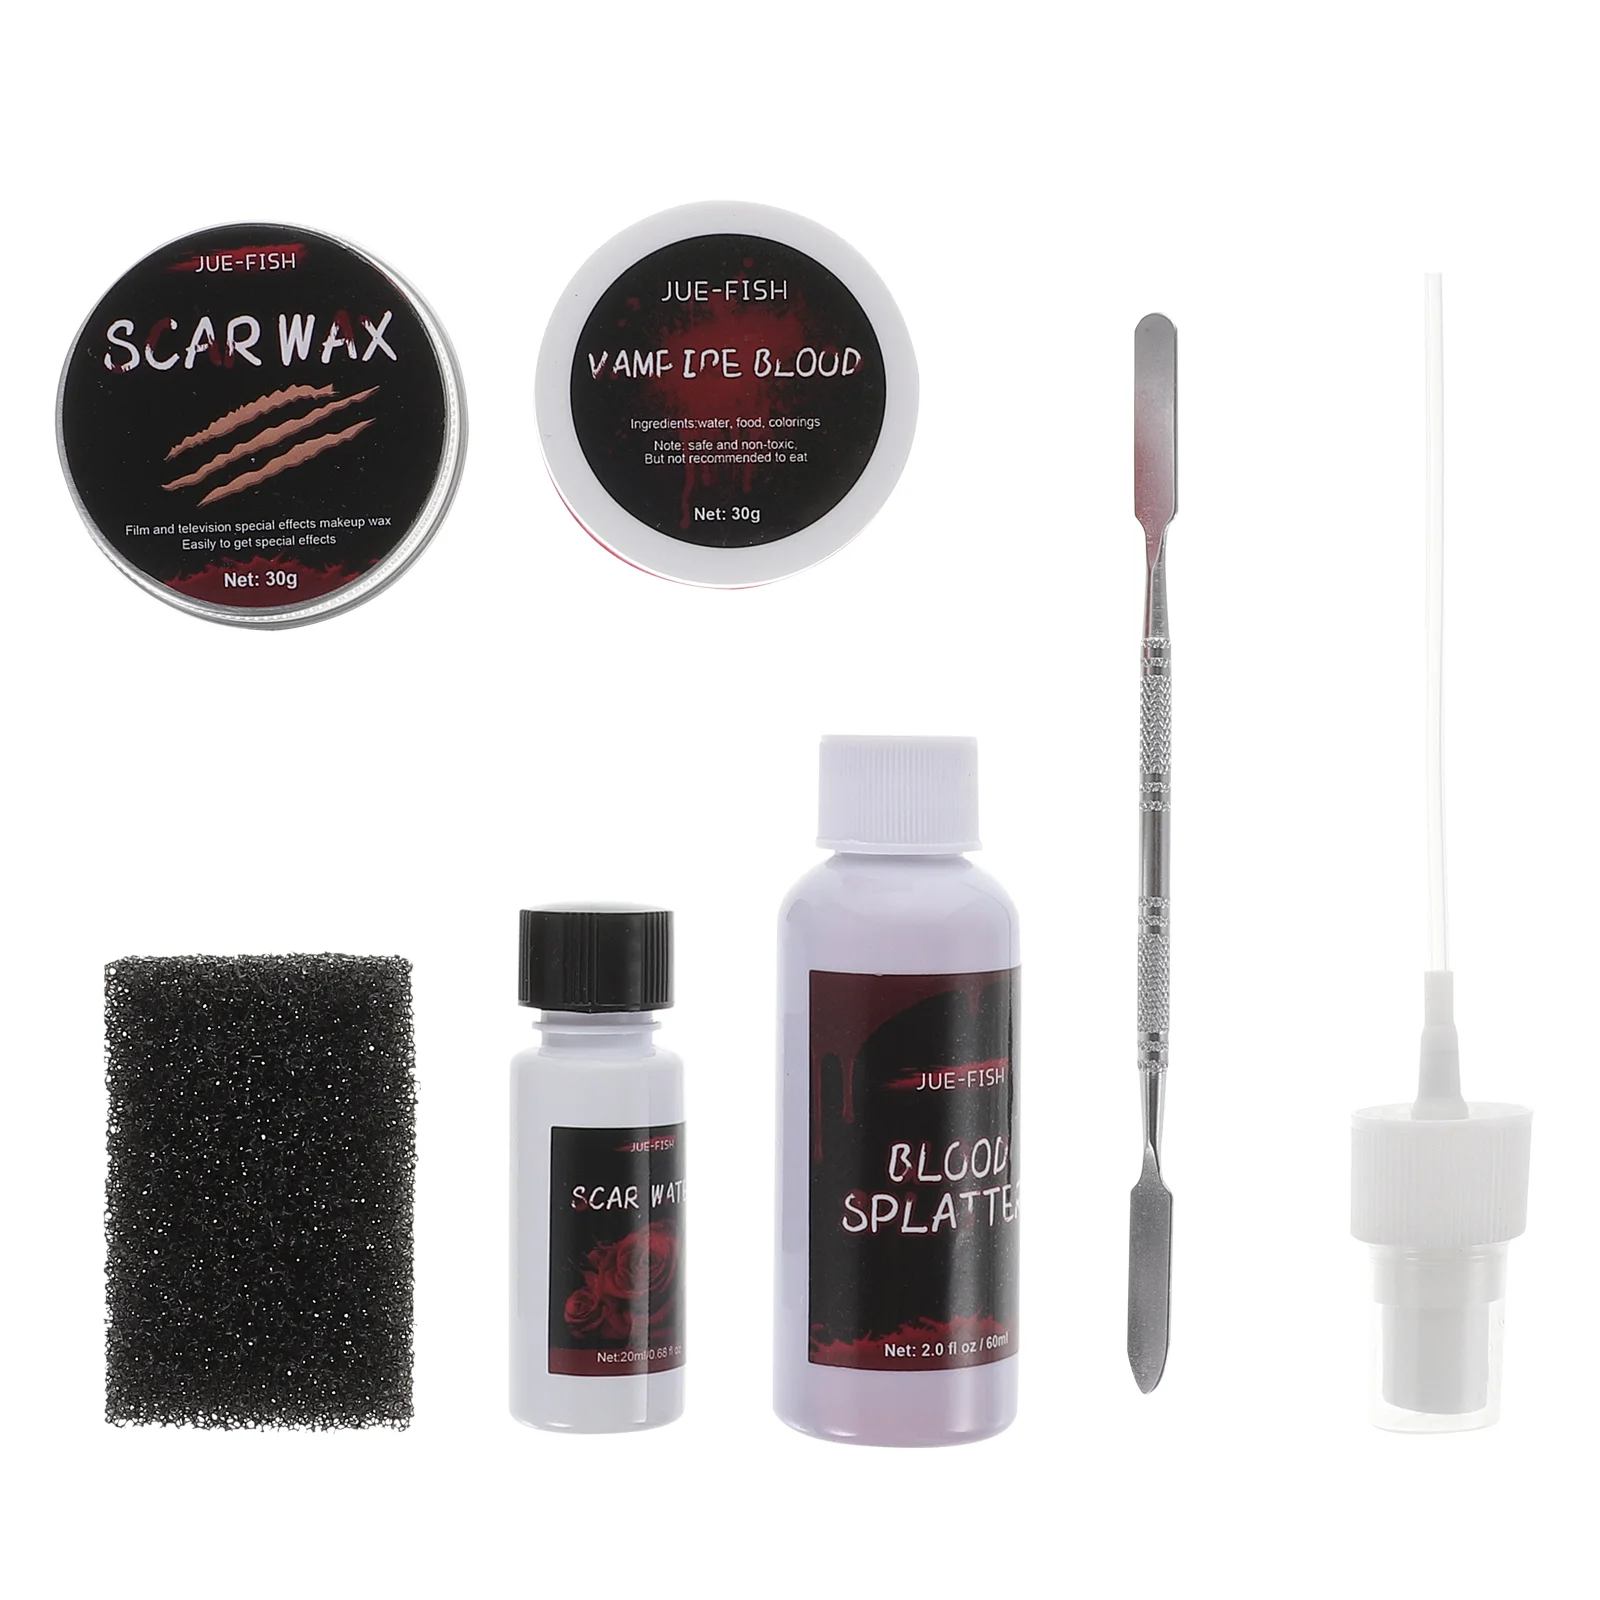 

Wax Makeup Bloodfake Scar Kit Wound Effects Modeling Specialskin Scabscars Paste Set Coagulated Splatterpaint Body Spray Party